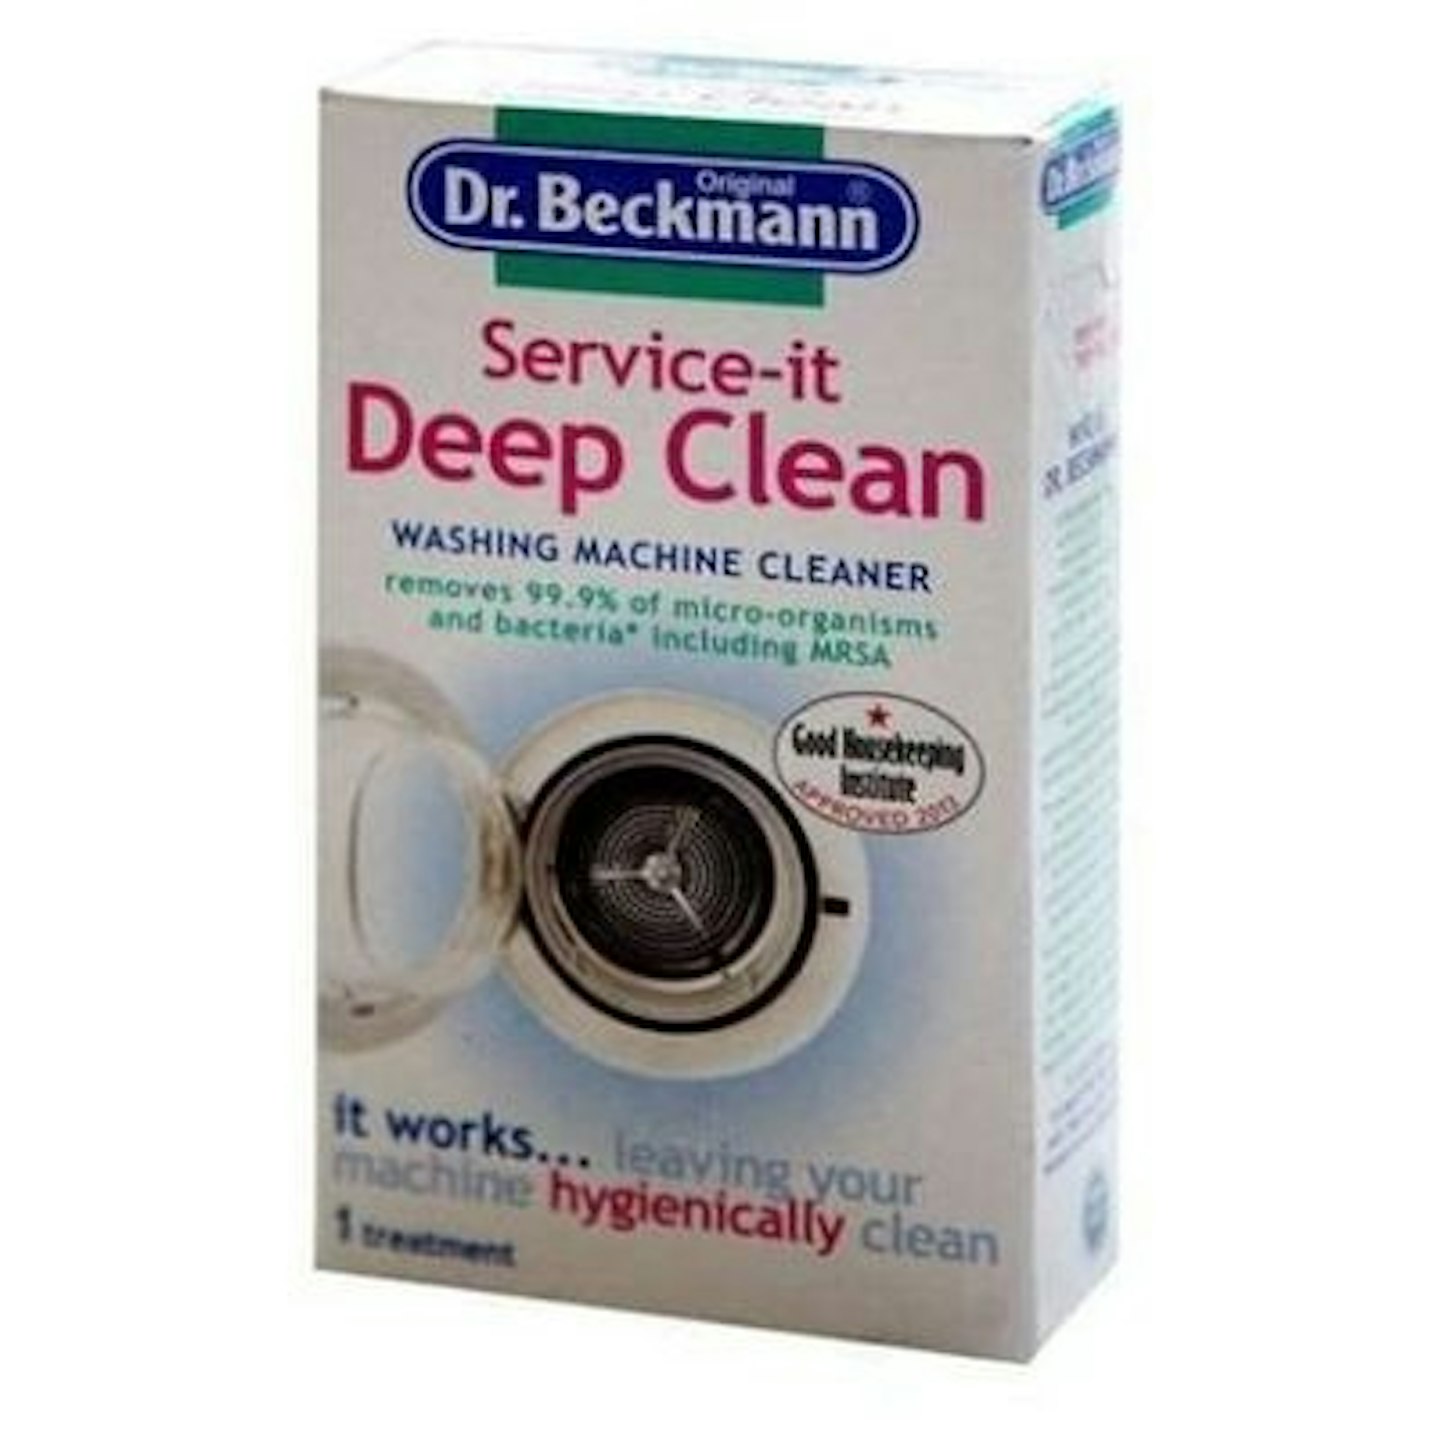 Dr Beckmann Washing Machine Cleaner - Review - Daisies & Pie